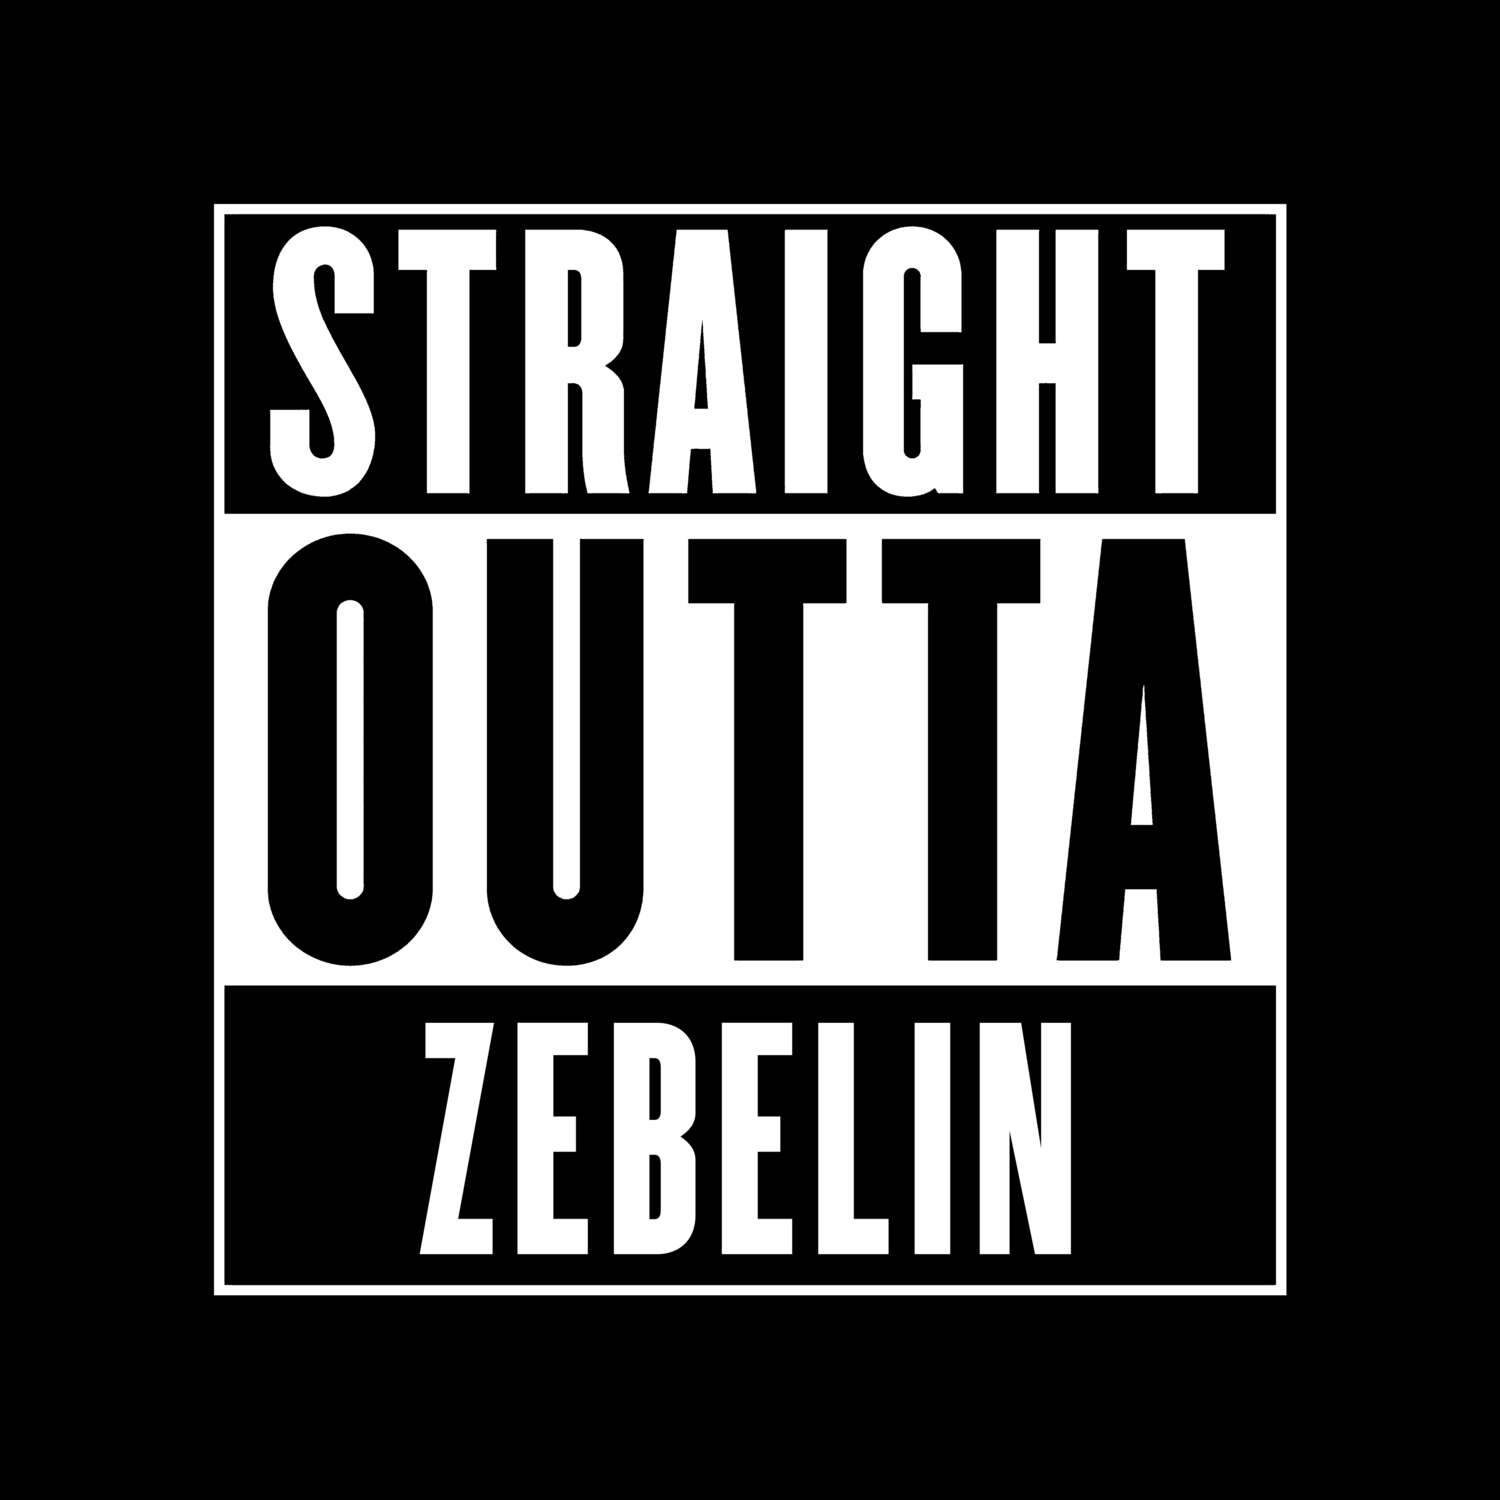 Zebelin T-Shirt »Straight Outta«